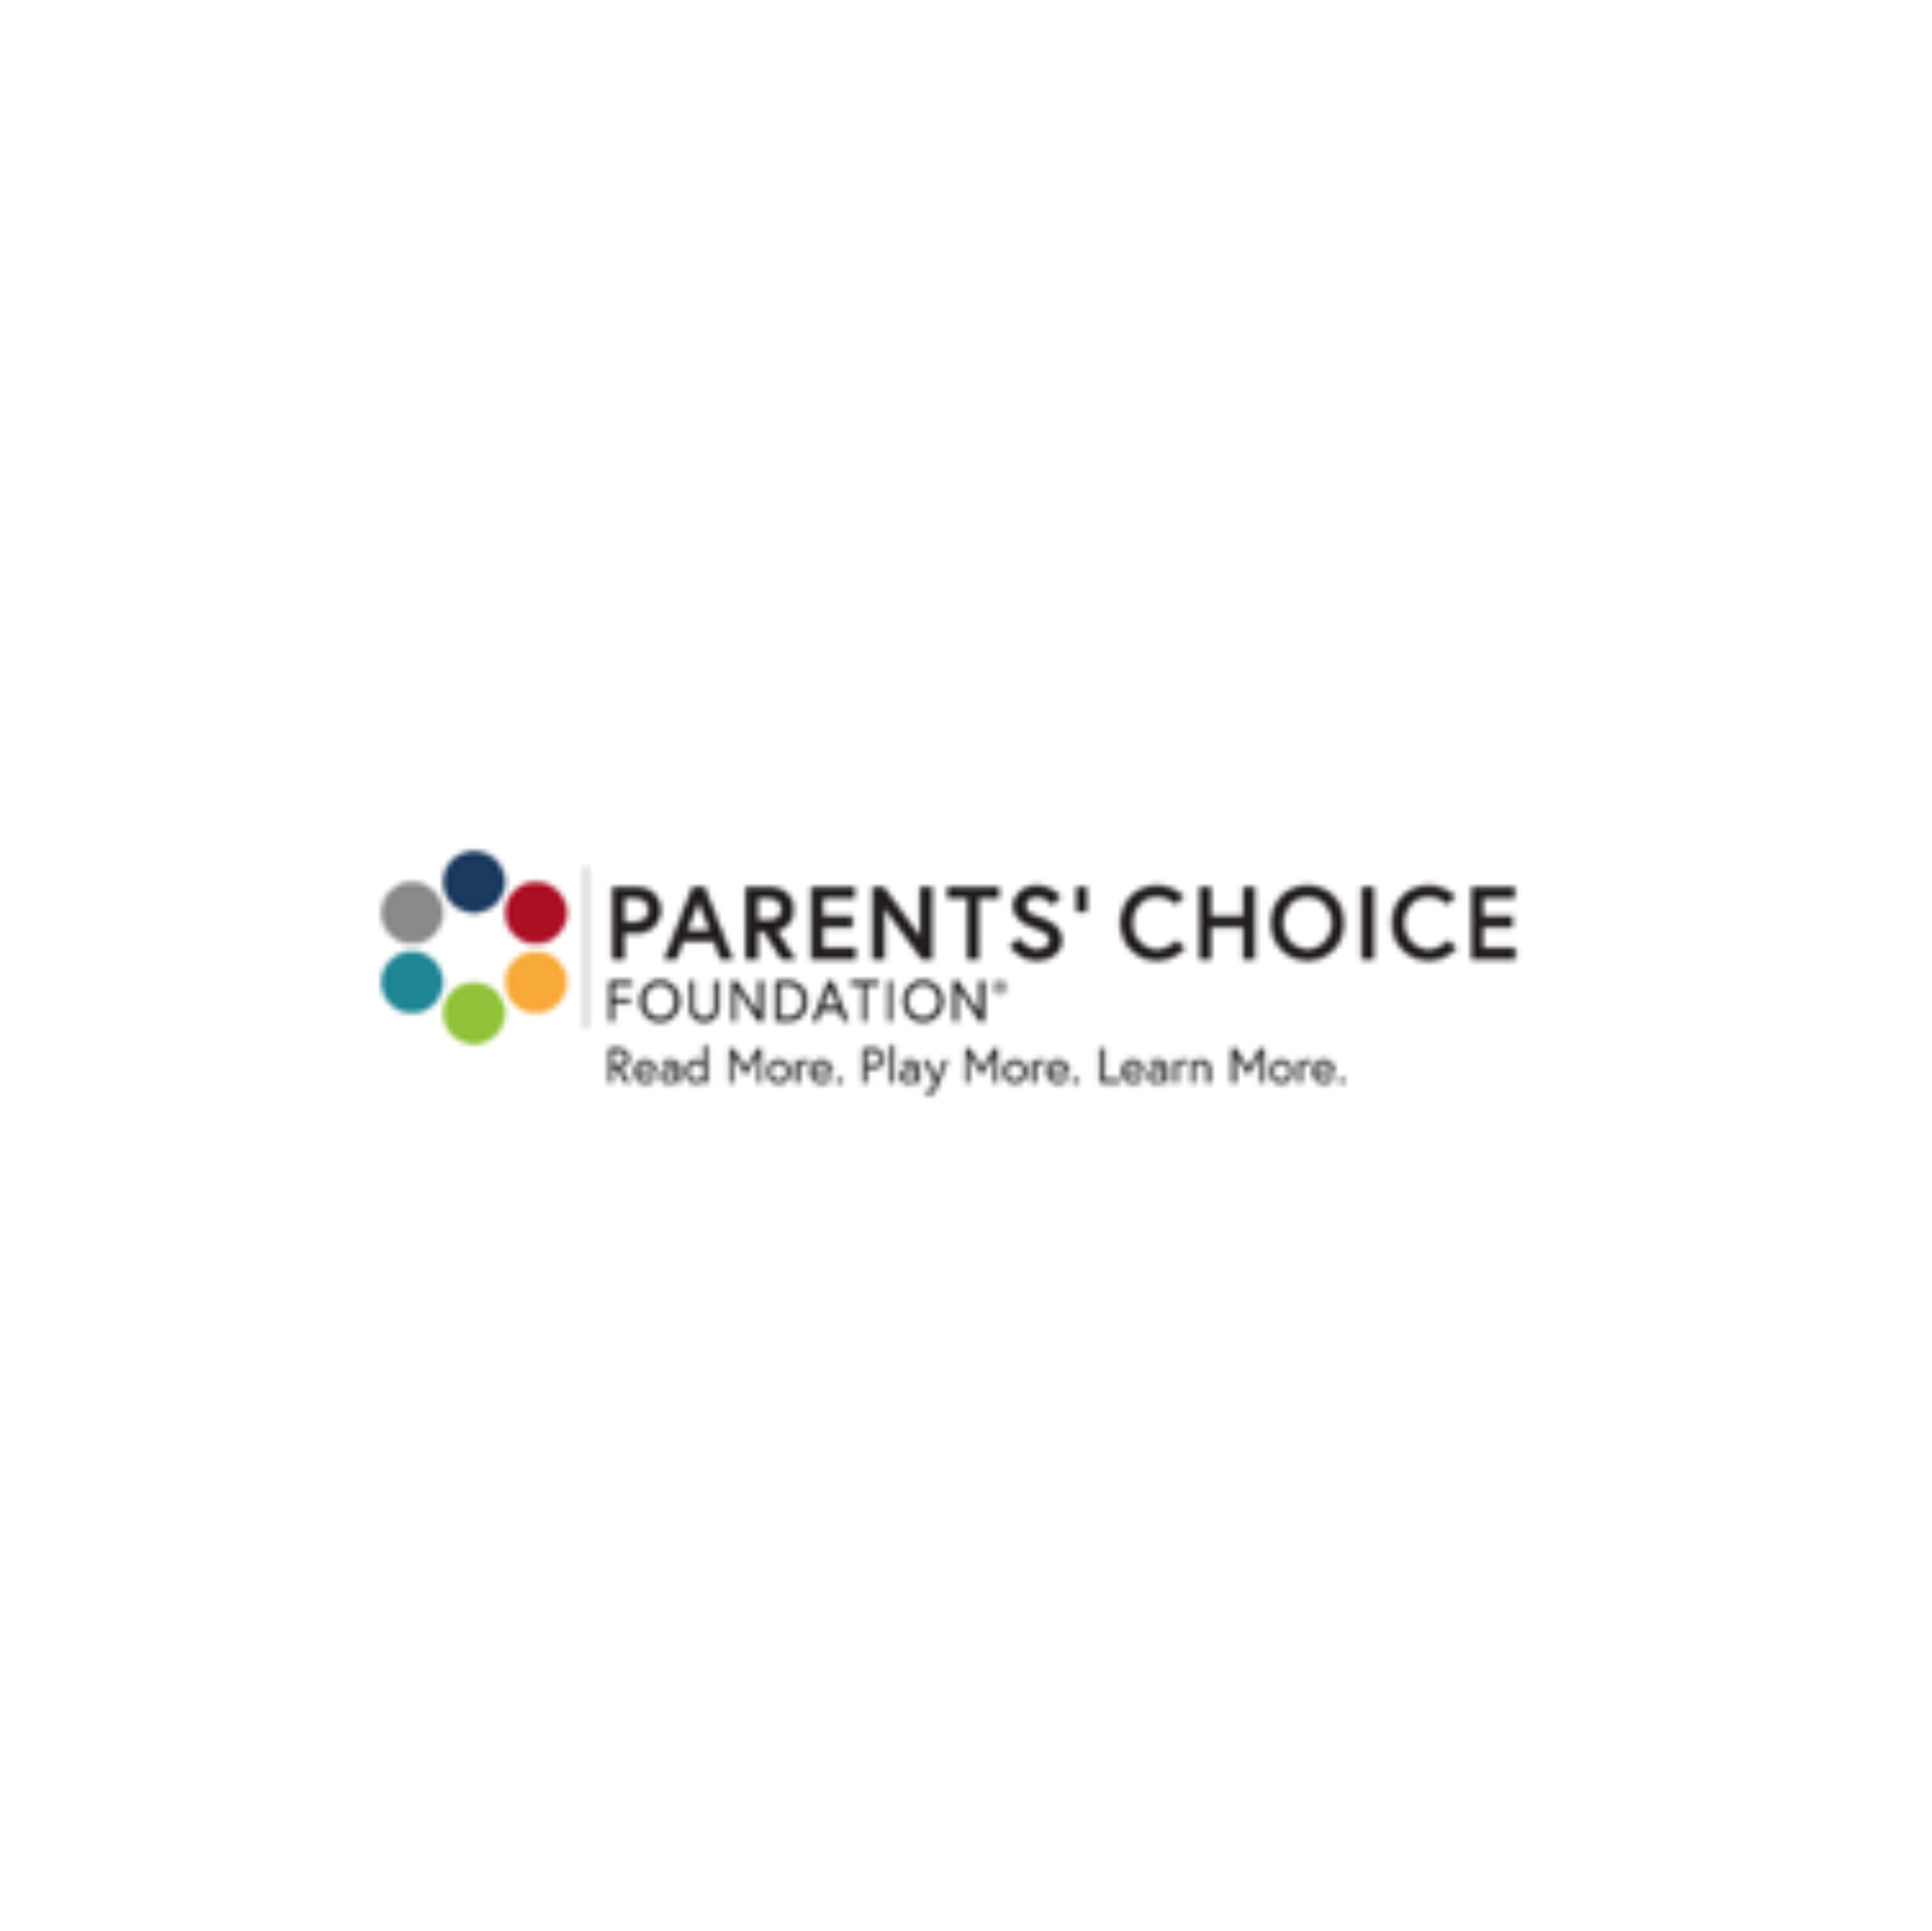 Parents' Choice Foundation